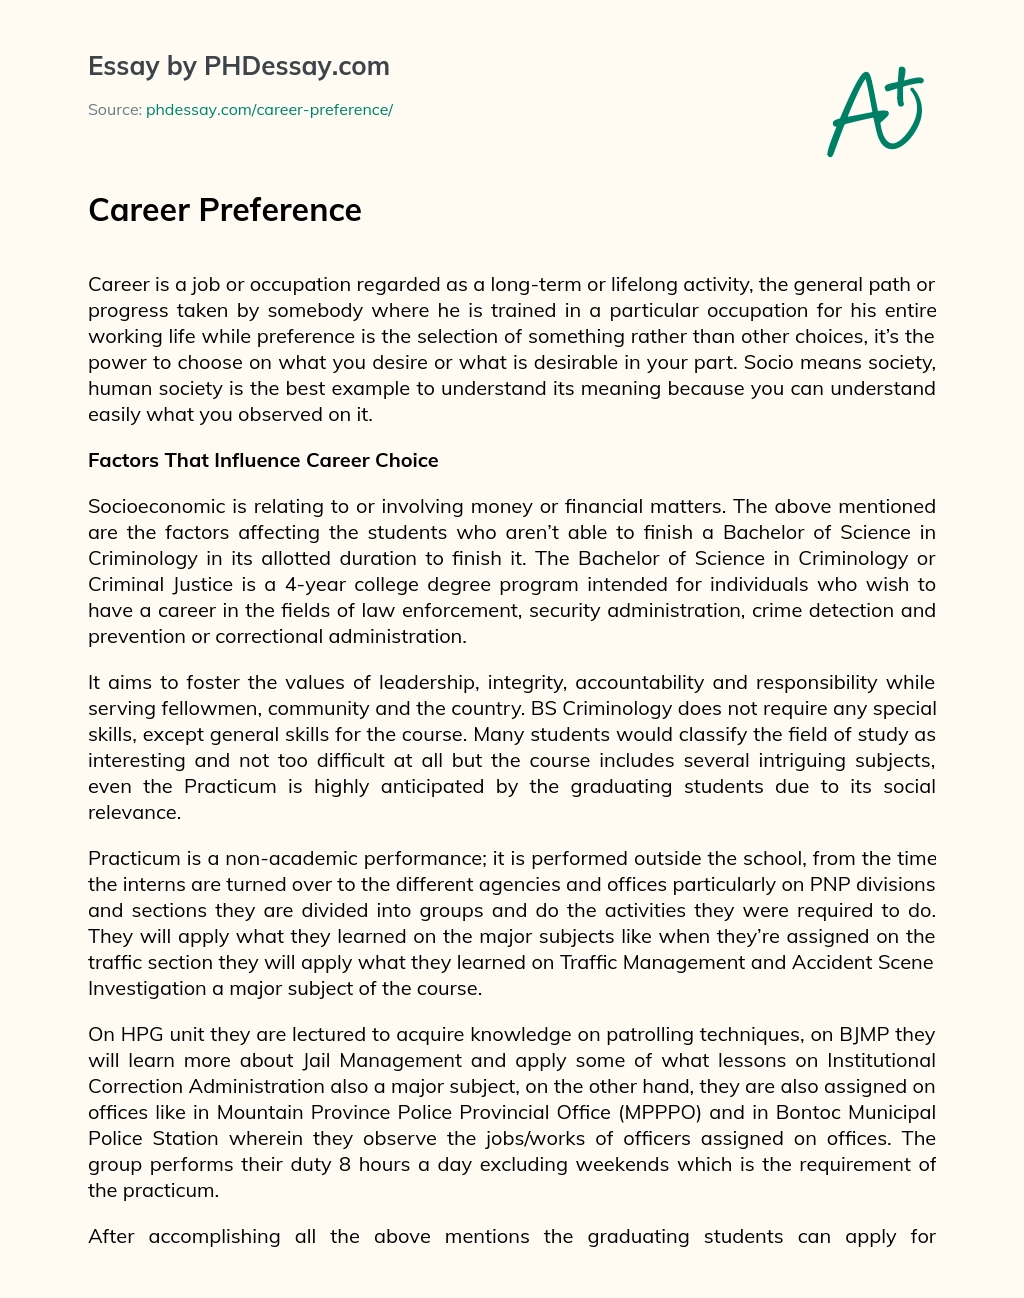 Career Preference essay